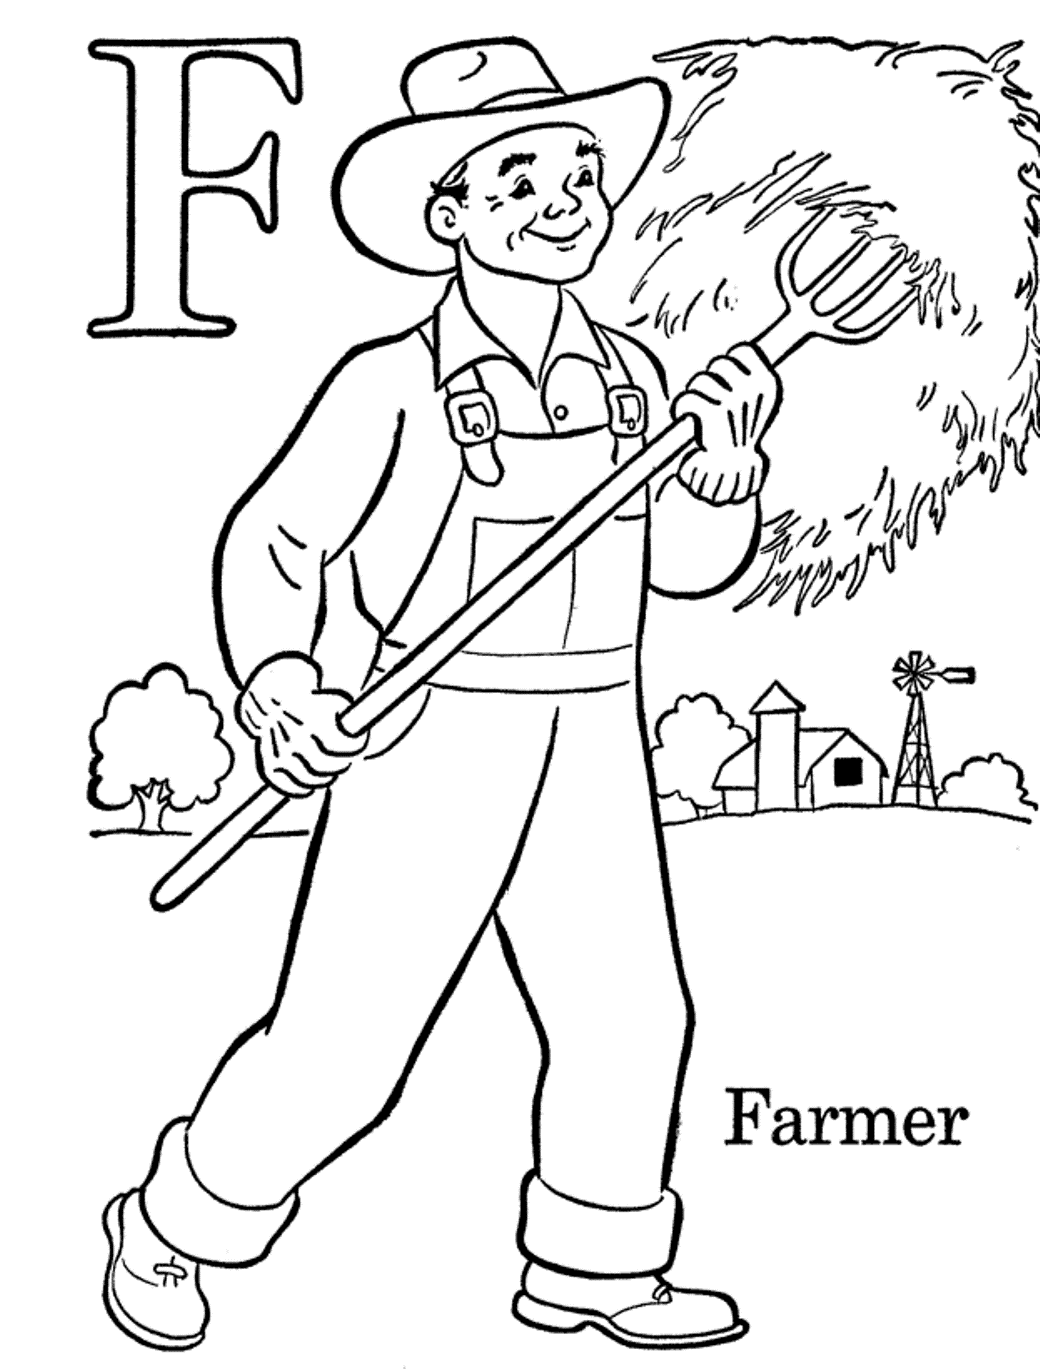 farmer coloring sheet 30 free farm coloring pages printable farmer sheet coloring 